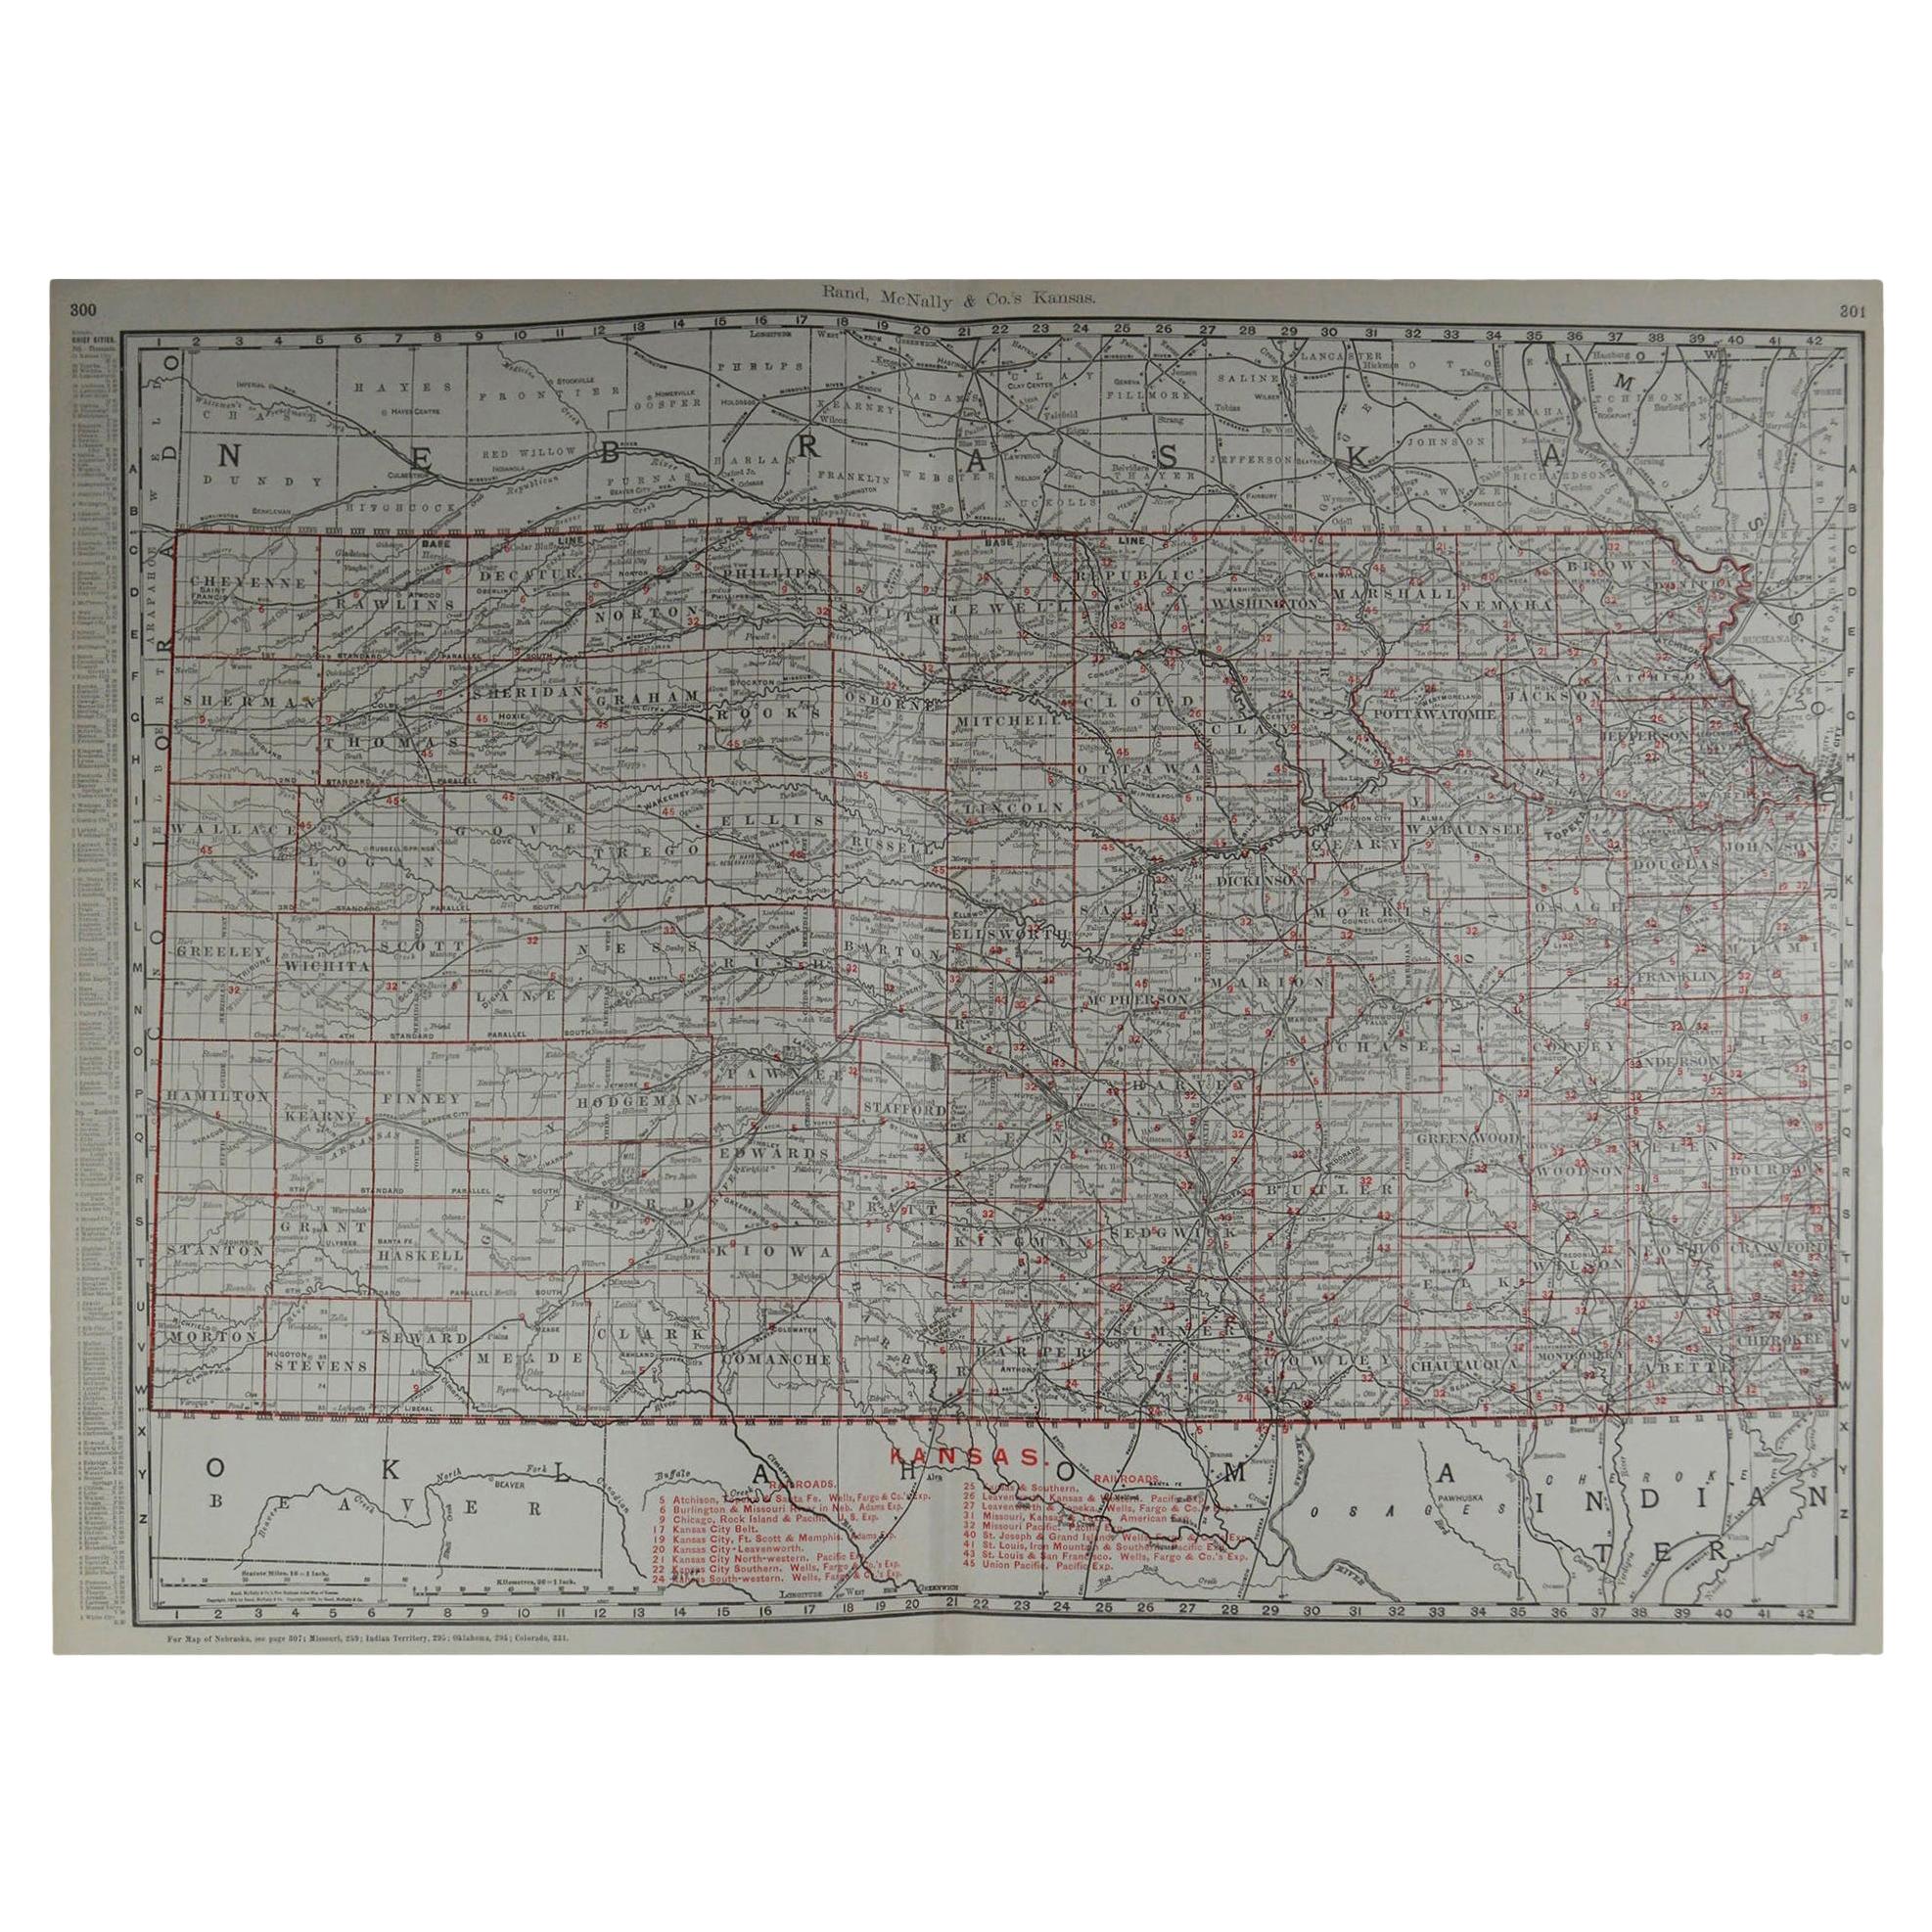 Large Original Antique Map of Kansas by Rand McNally, circa 1900